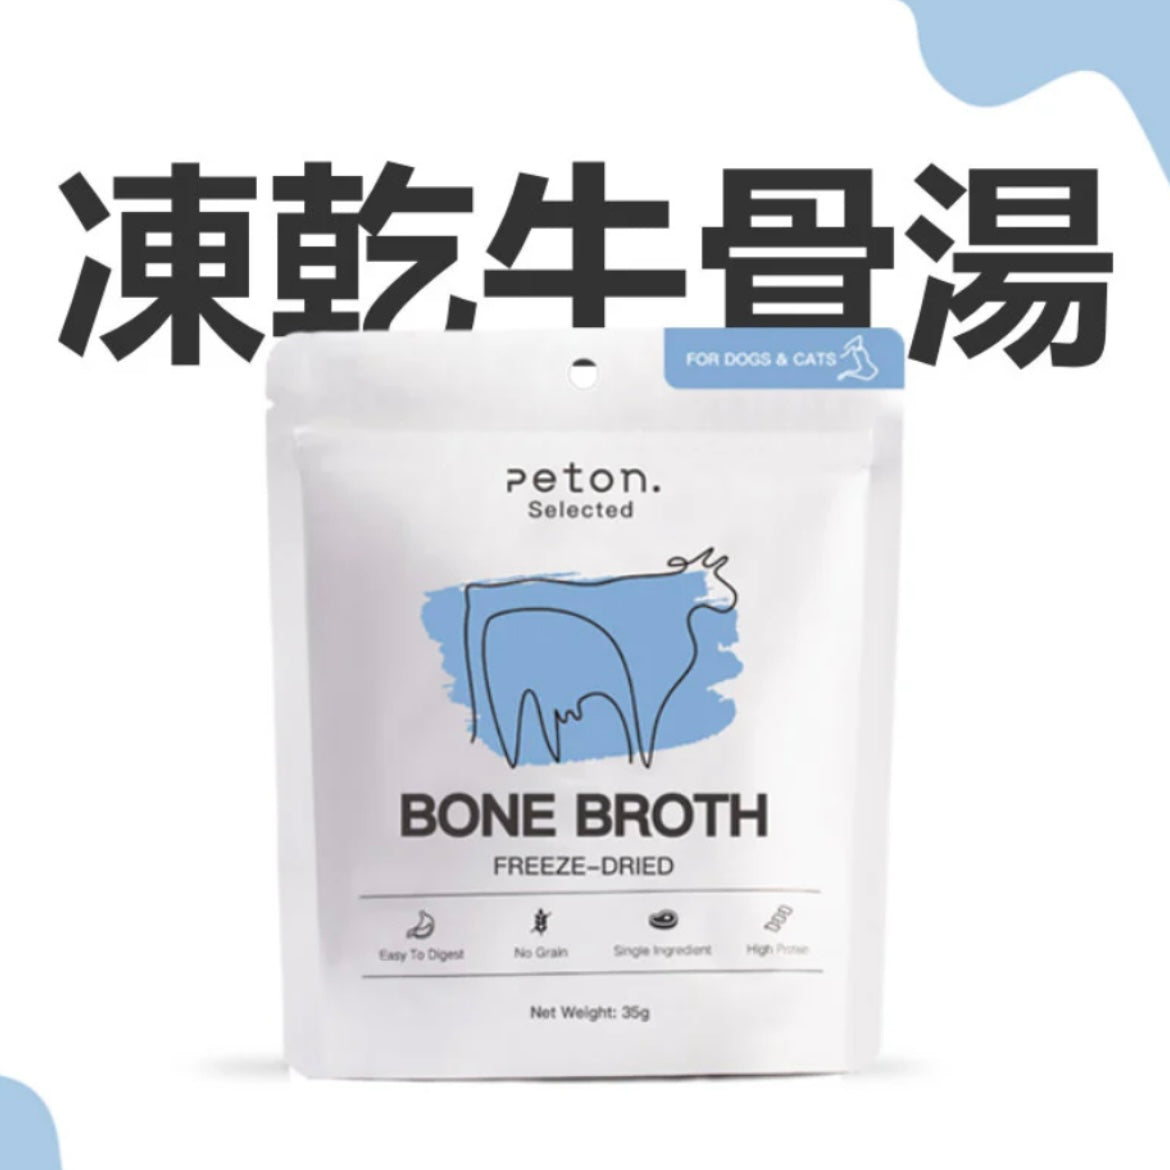 Beef Freeze Dried Bone Broth